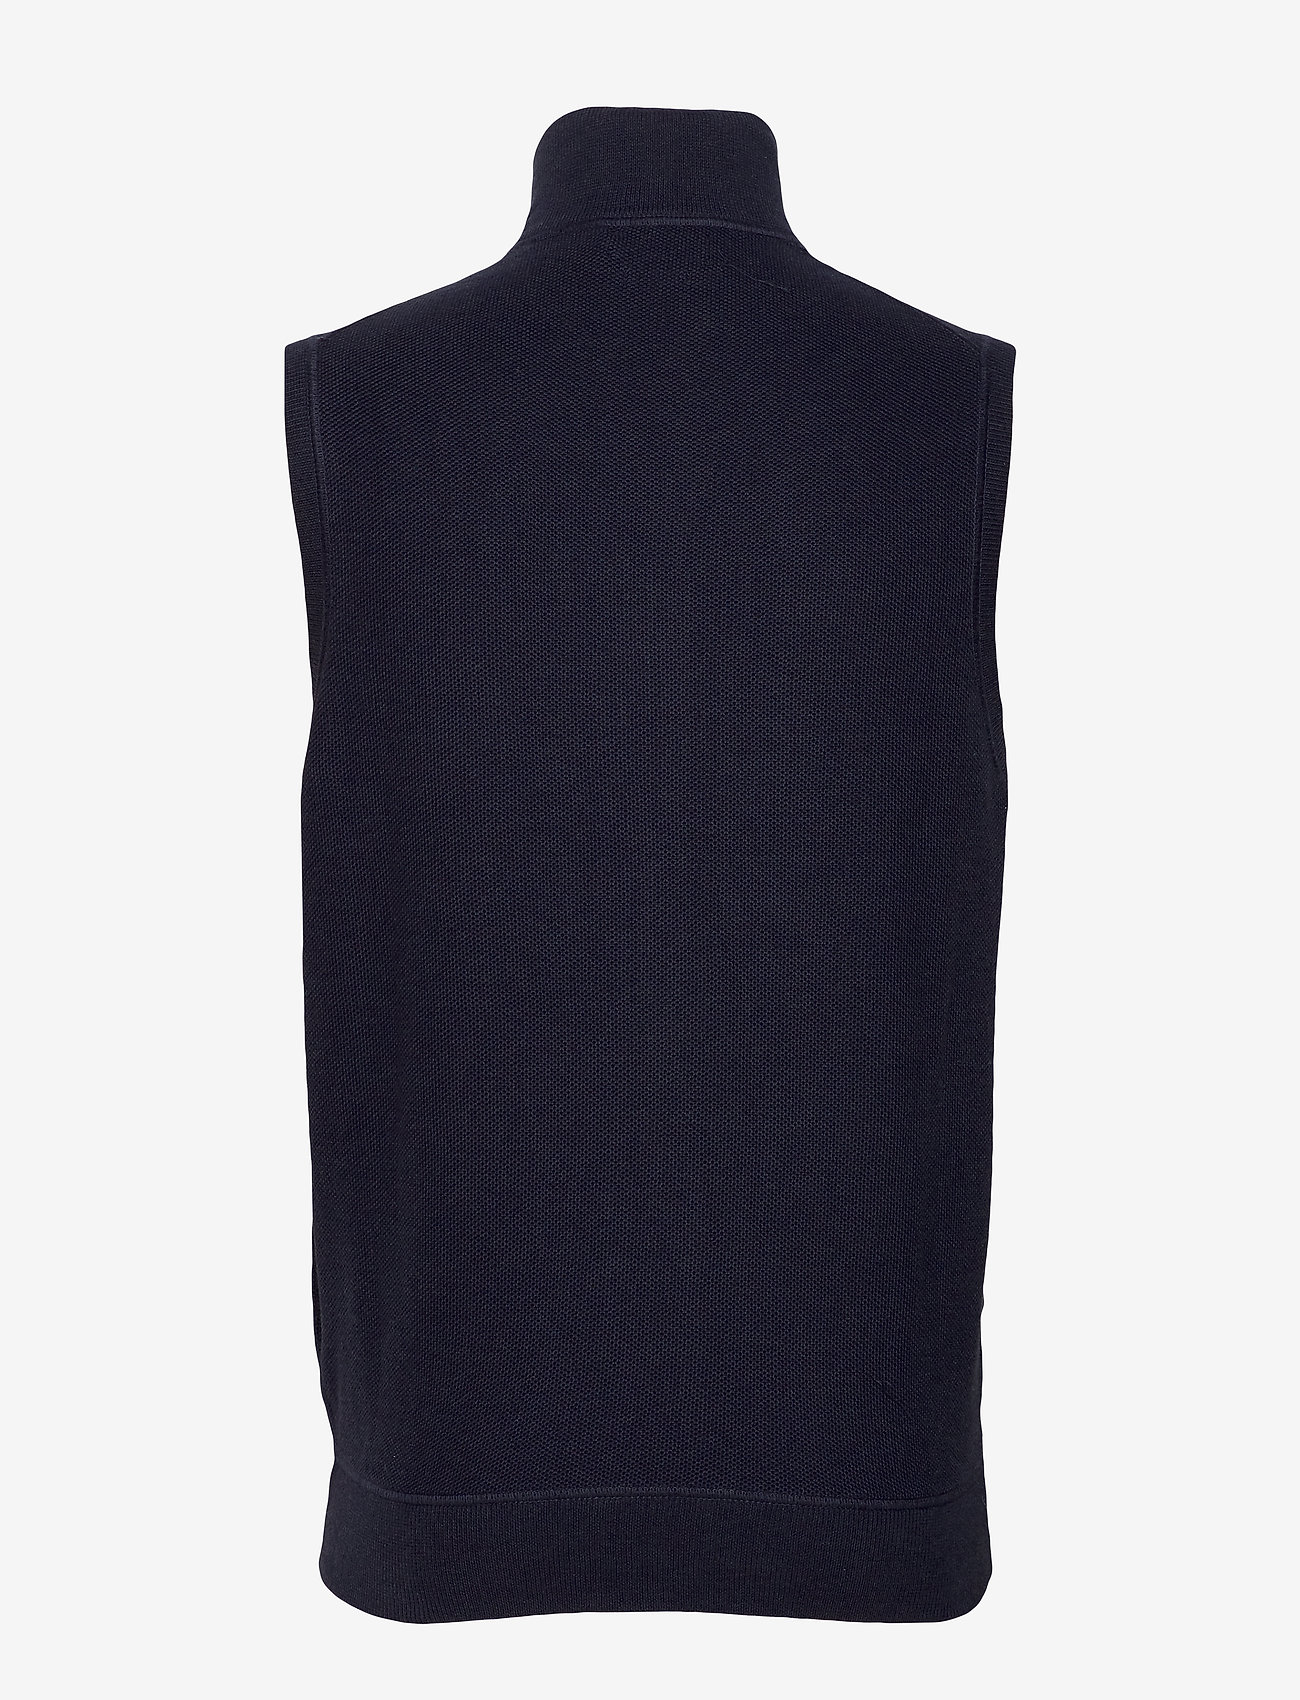 black polo sweater vest